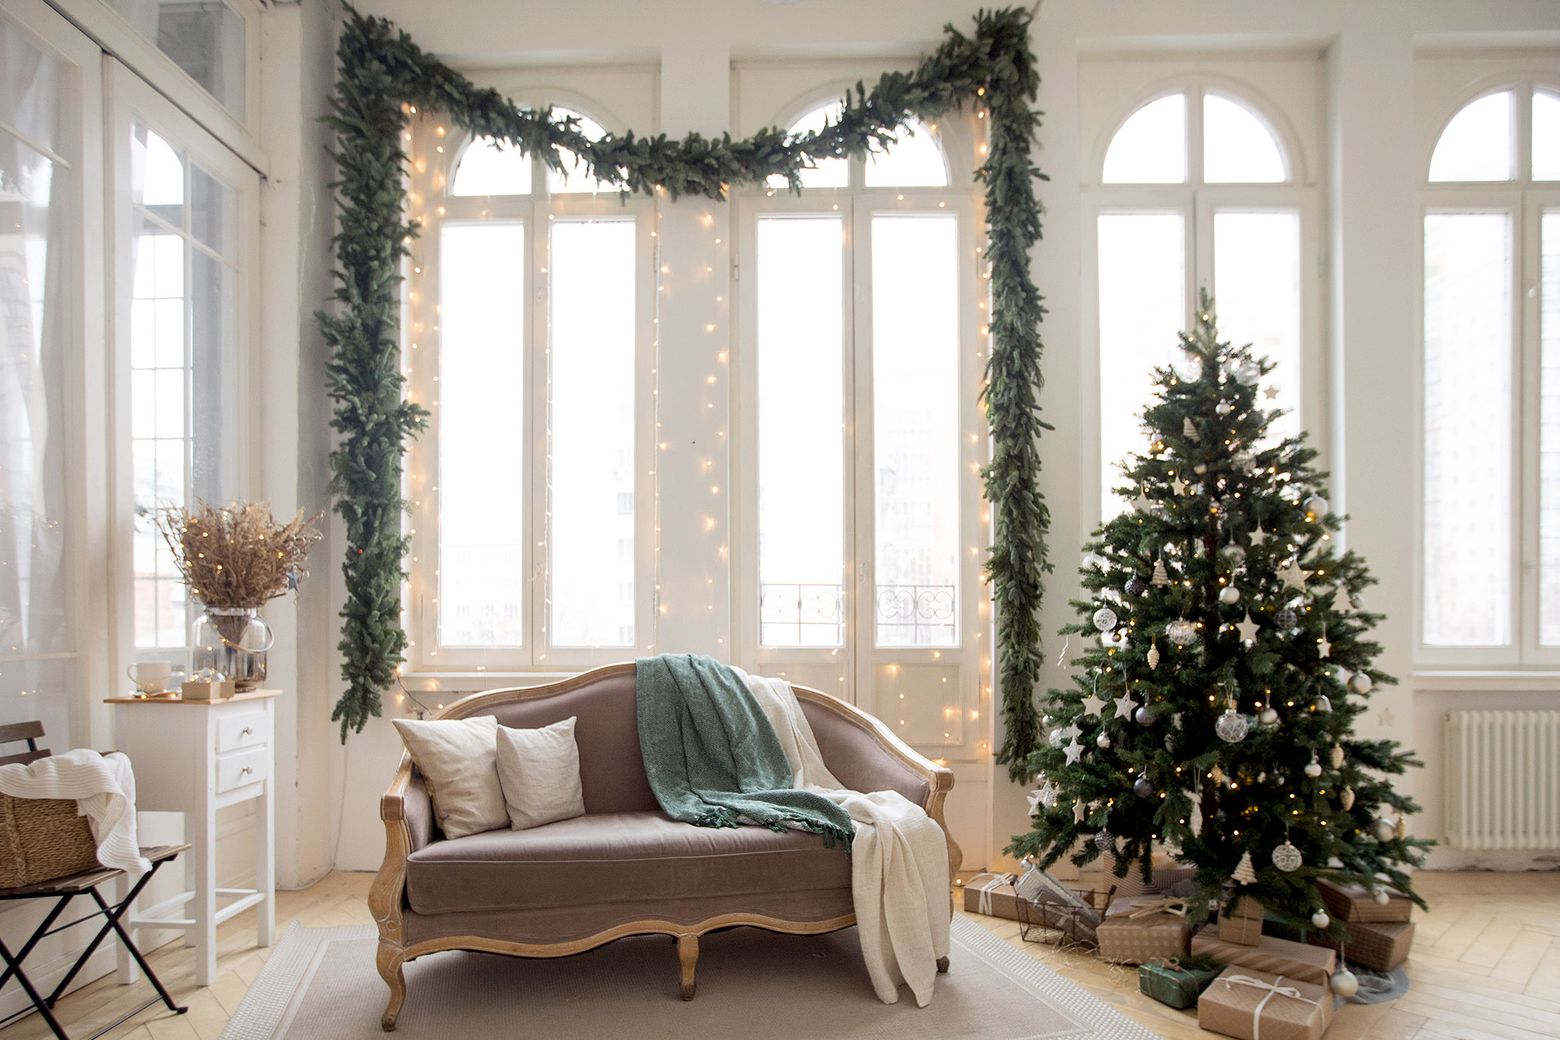 Creating Simple Scandinavian Style Holiday Decor